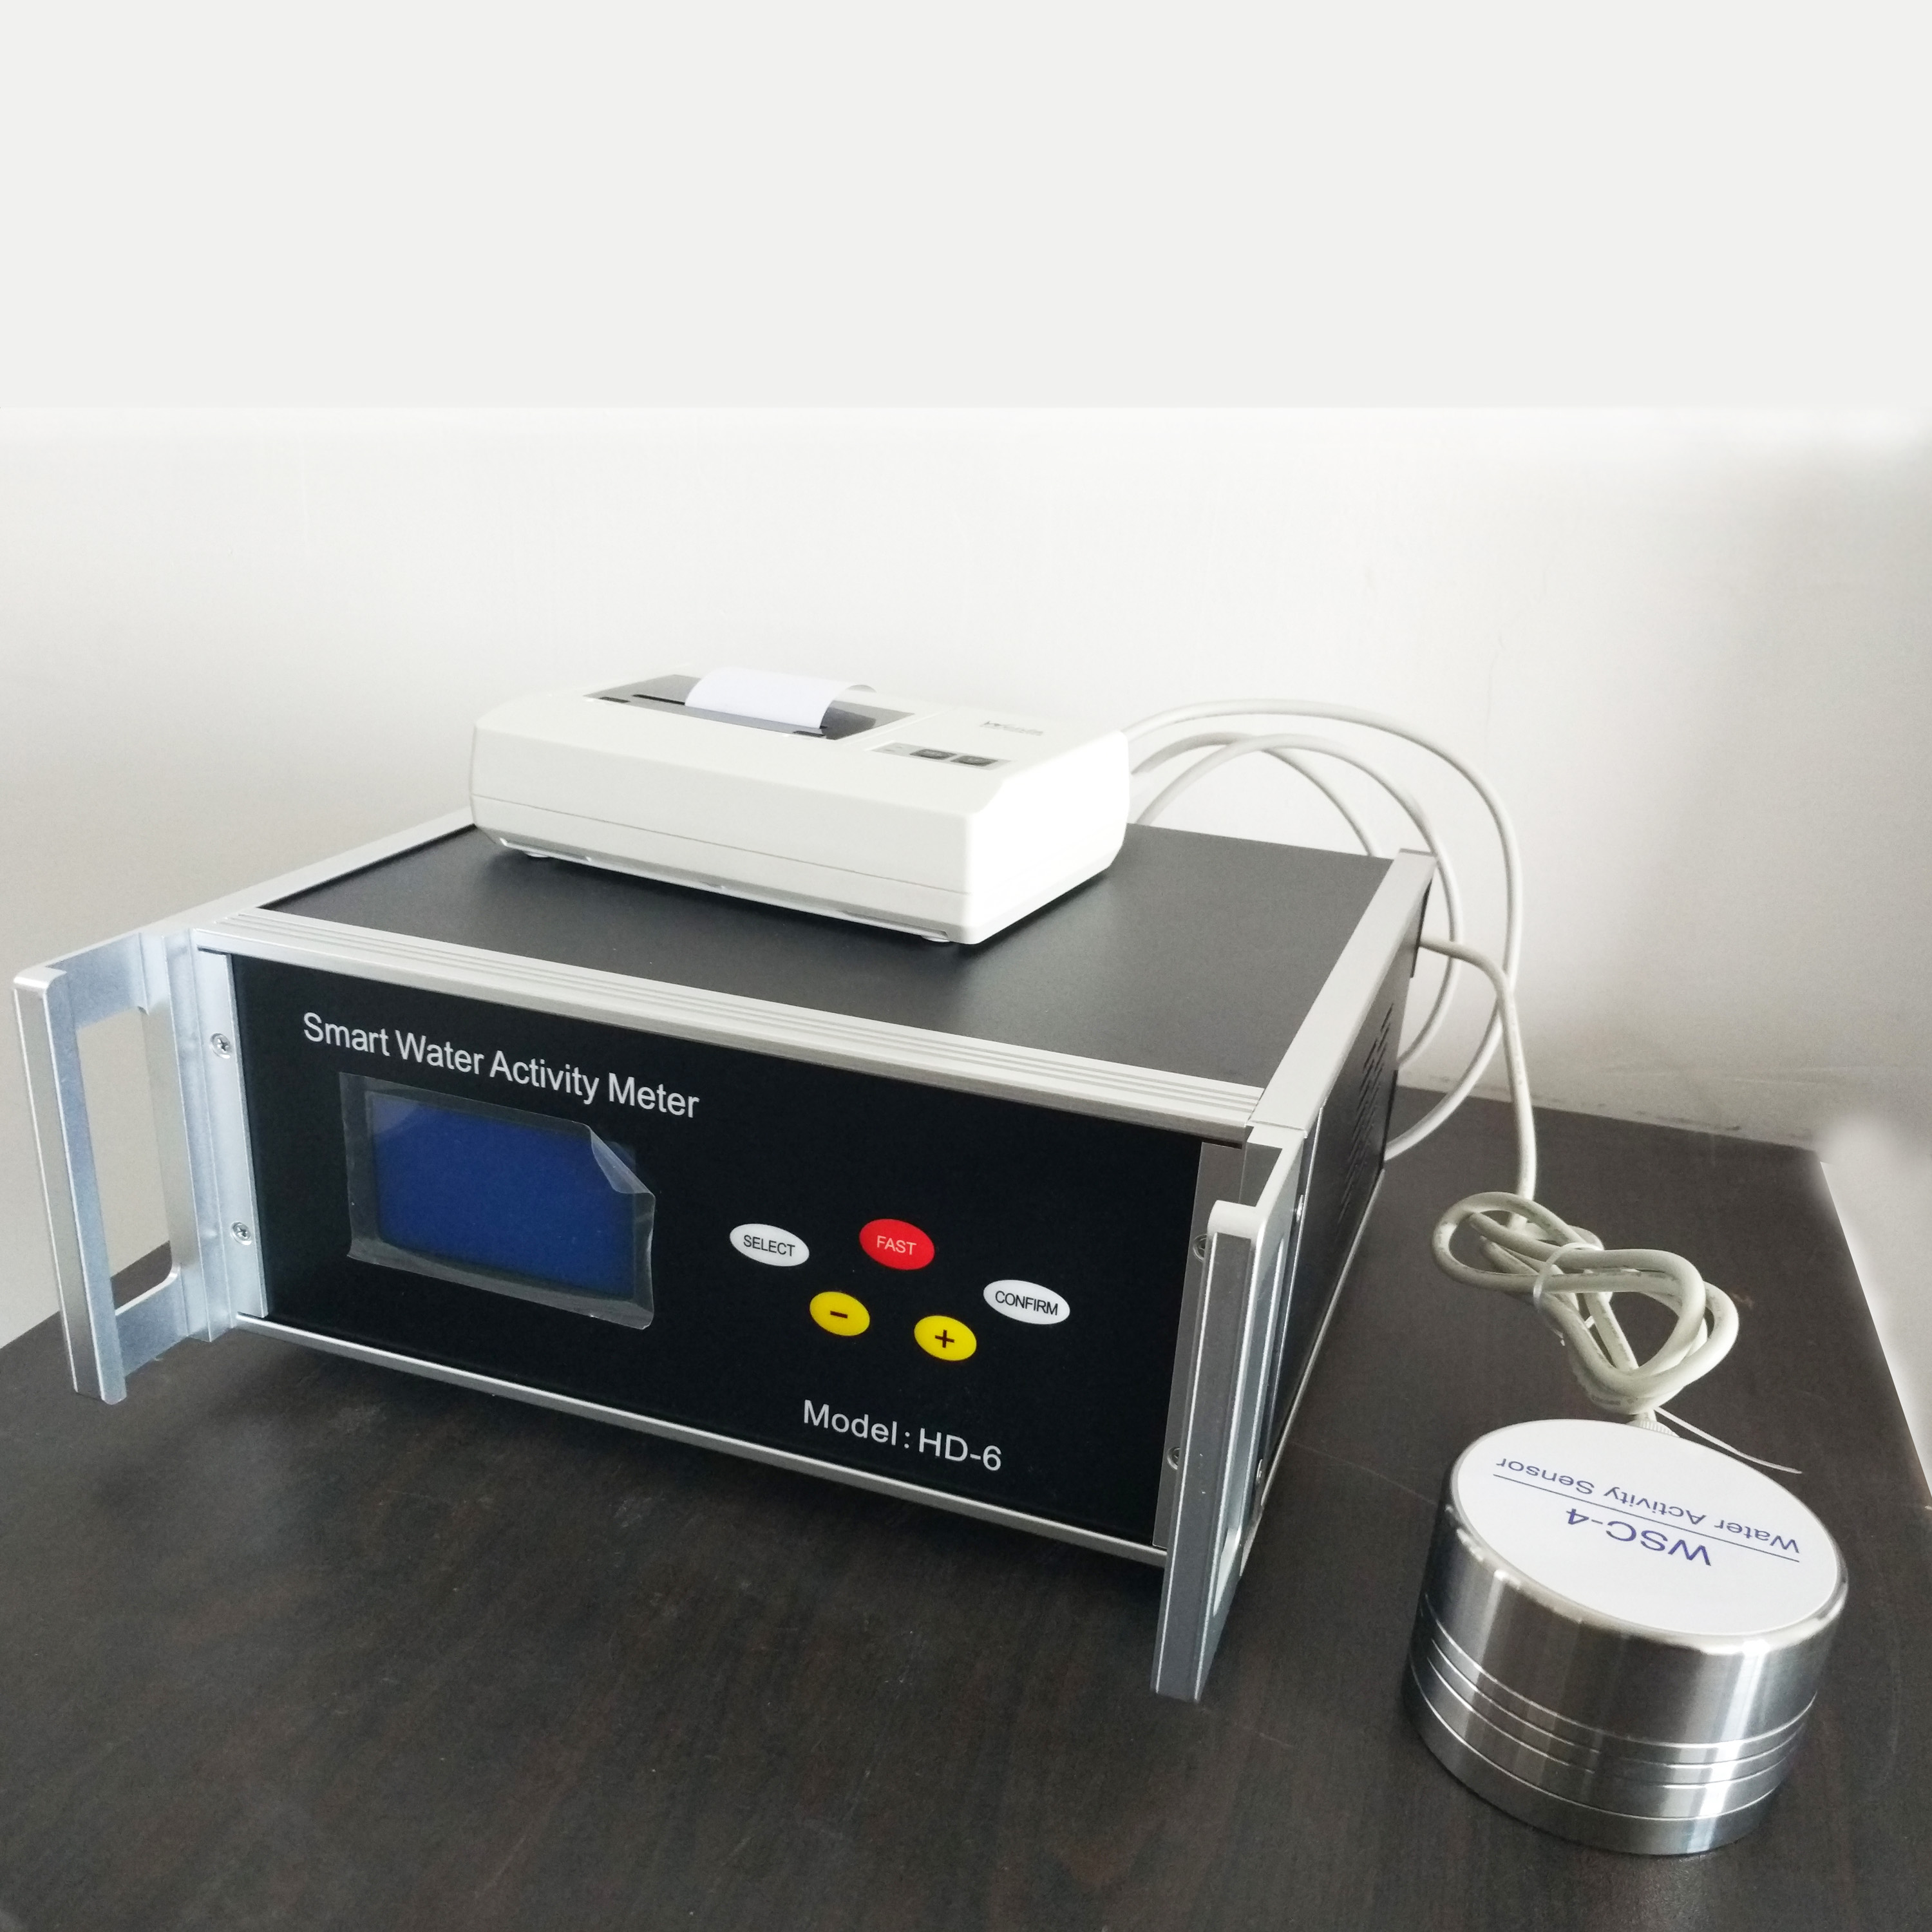 NADE 4 sensor Food Smart Water activity meter with PC software